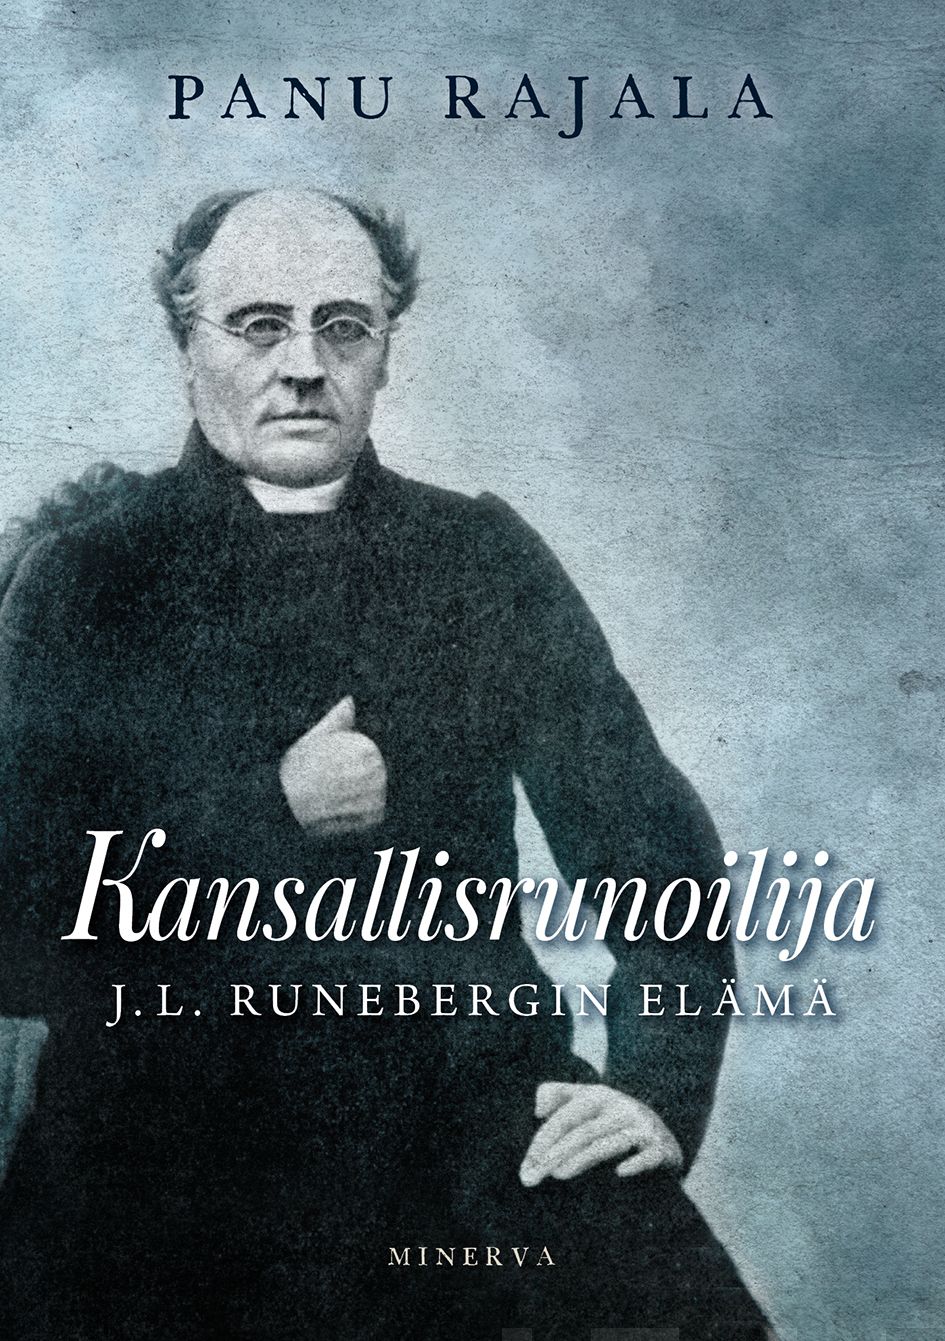 Rajala, Panu - Kansallisrunoilija: J. L. Runebergin elämä, ebook